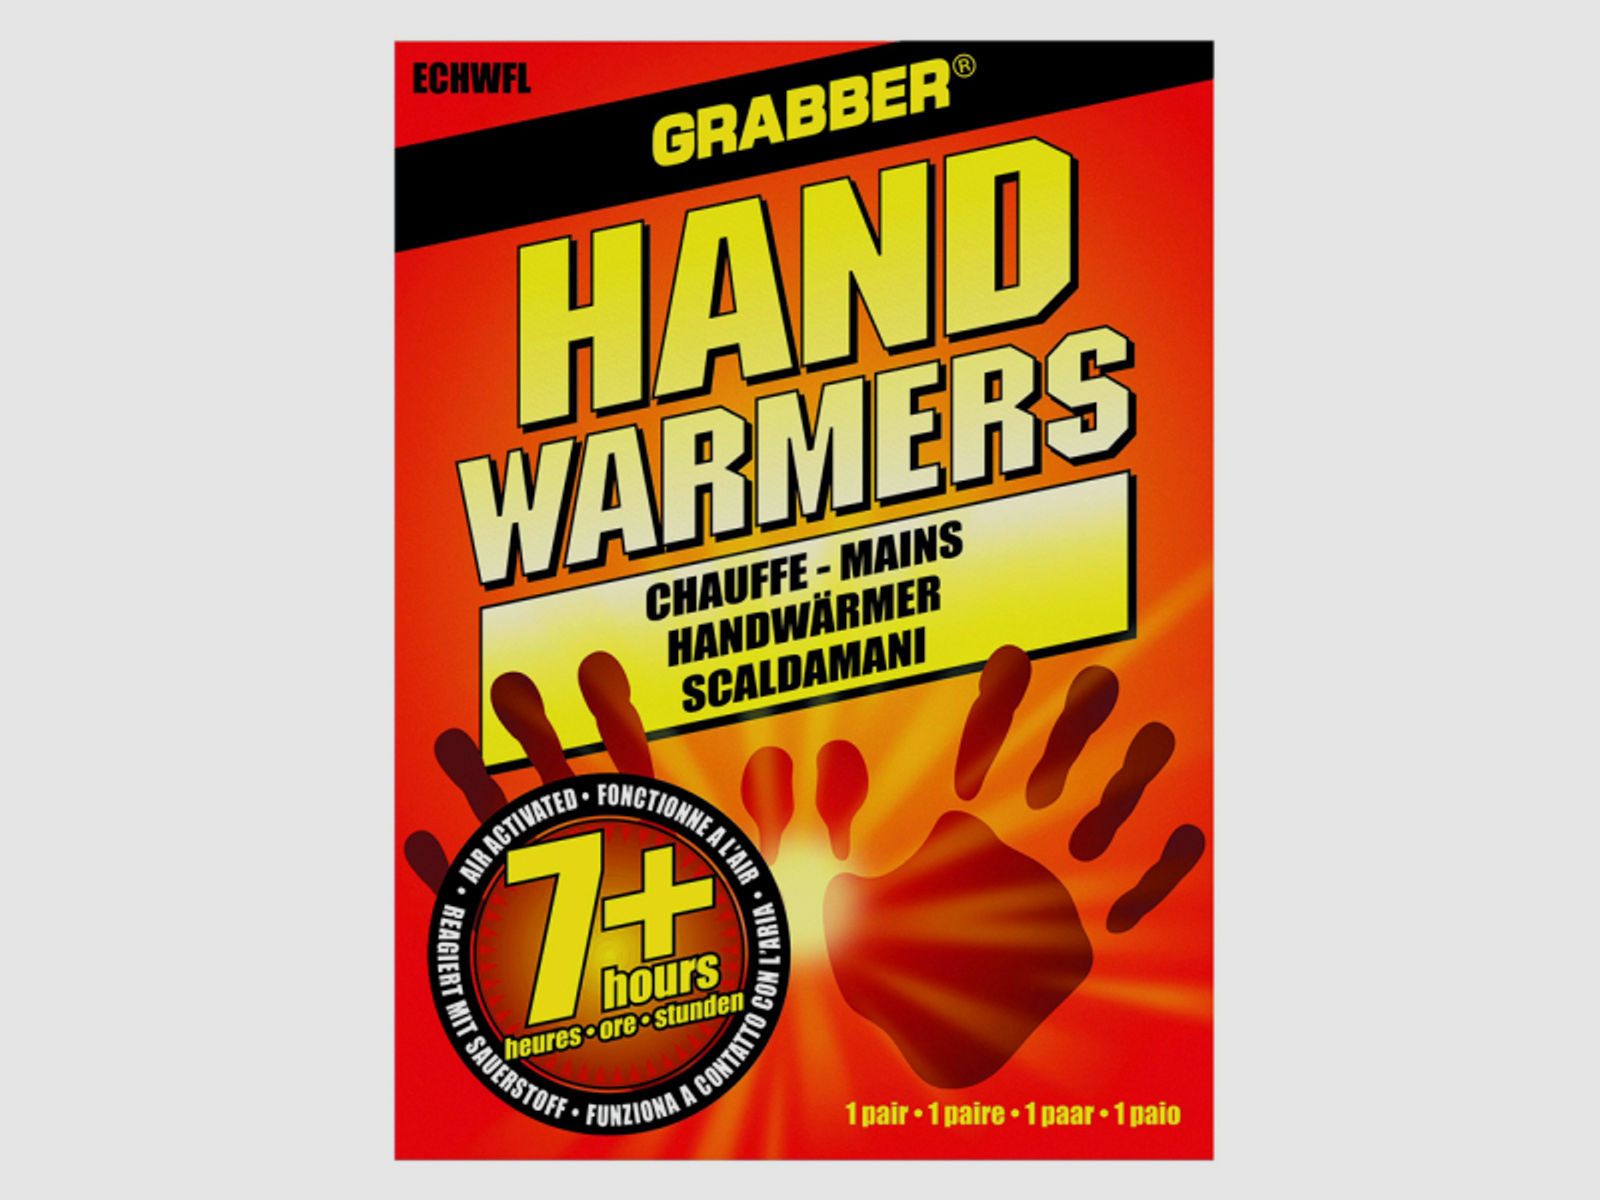 GRABBER Handwärmer | 1 Paar Wärmepads 7h Stunden 57 - 70° Grad Wärme | Aktivkohle Eisen Salz | NEU!